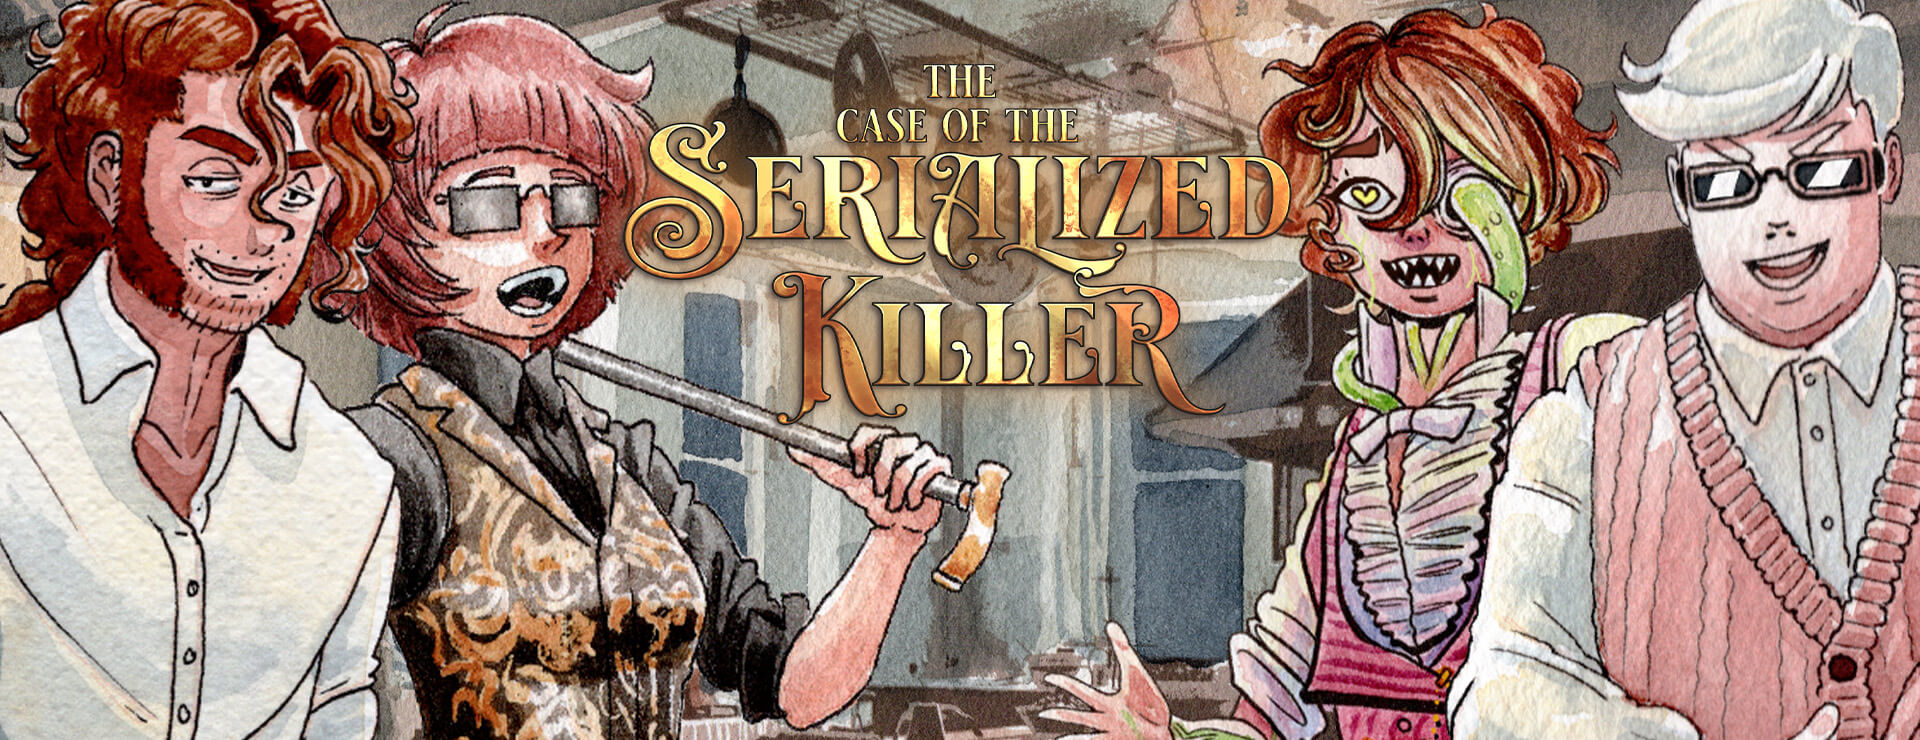 The Case of the Serialized Killer - Novela Visual Juego